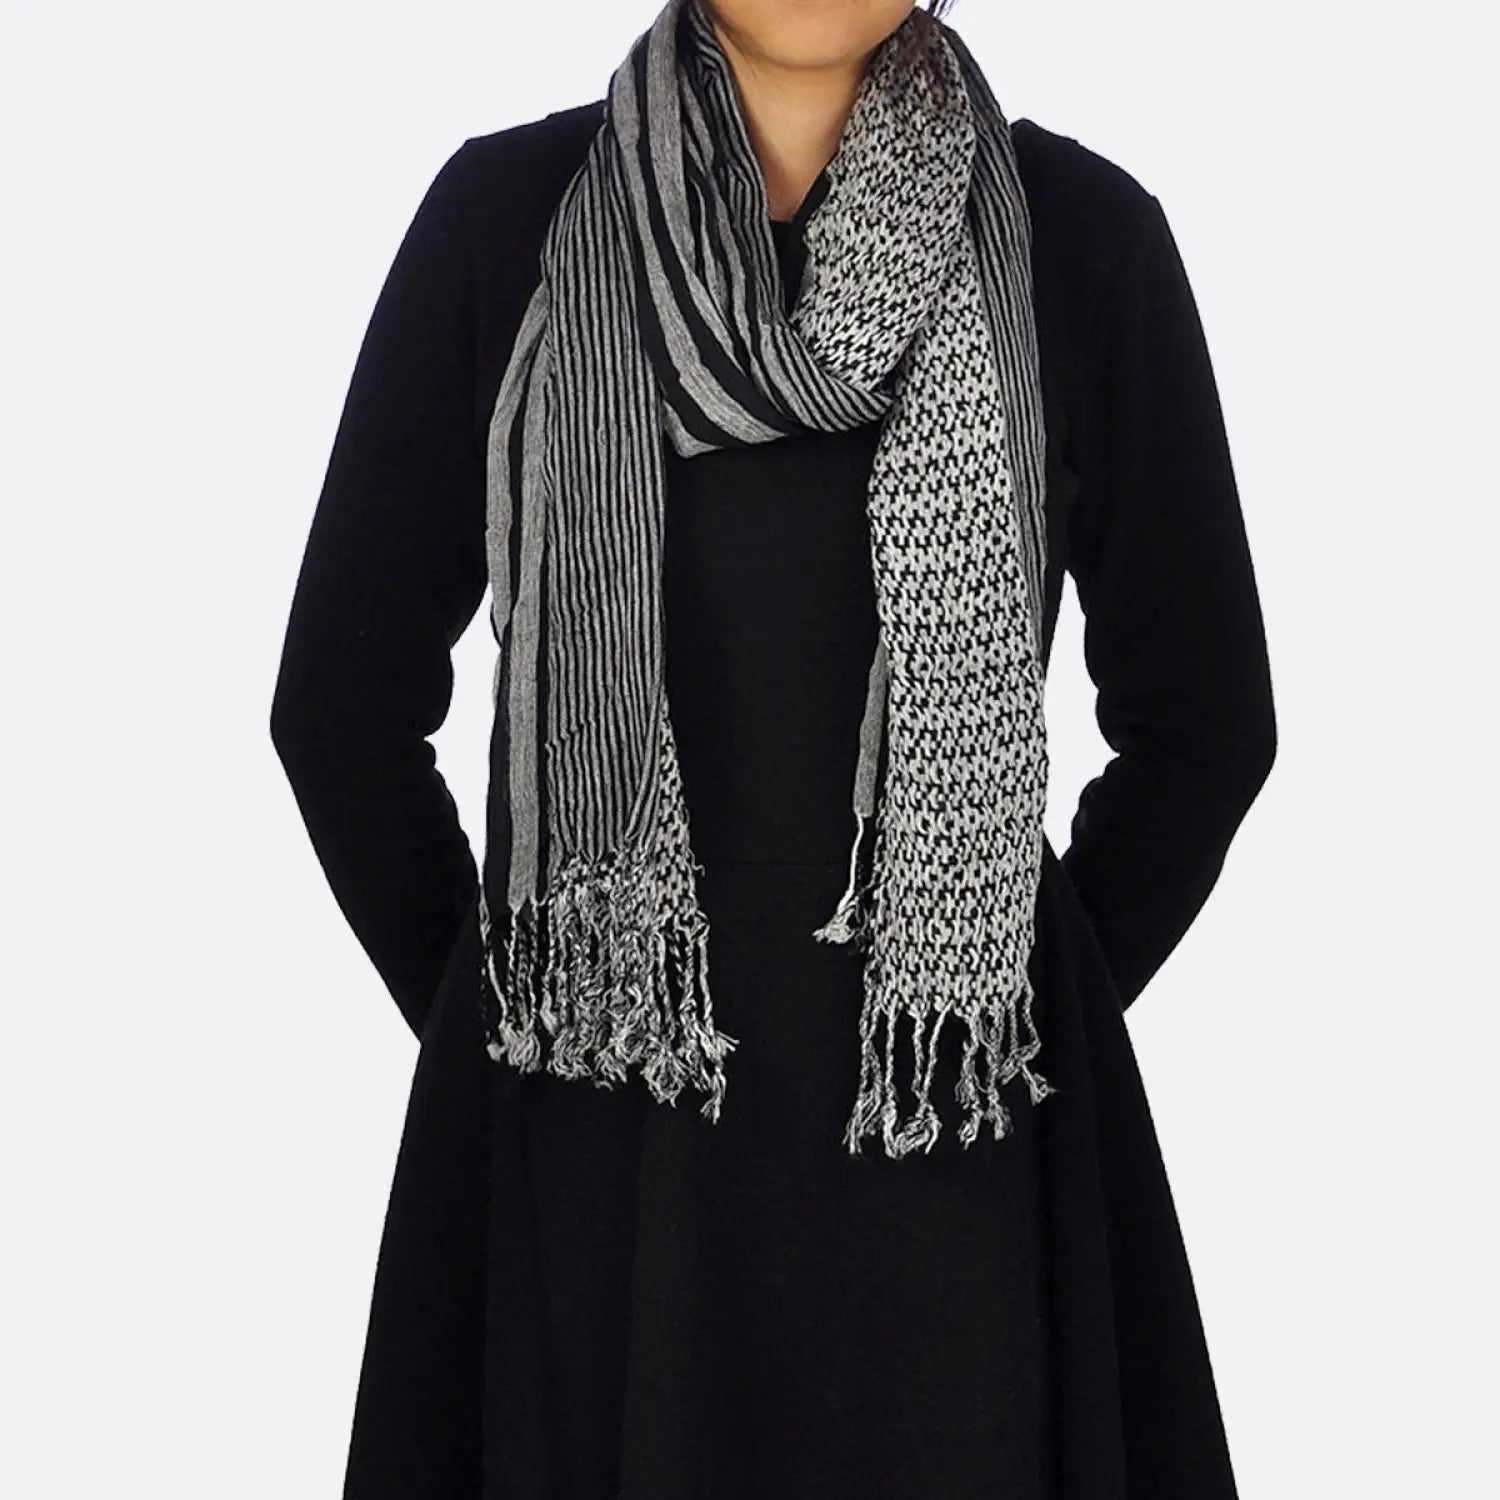 Elegant striped woven winter scarf on woman.